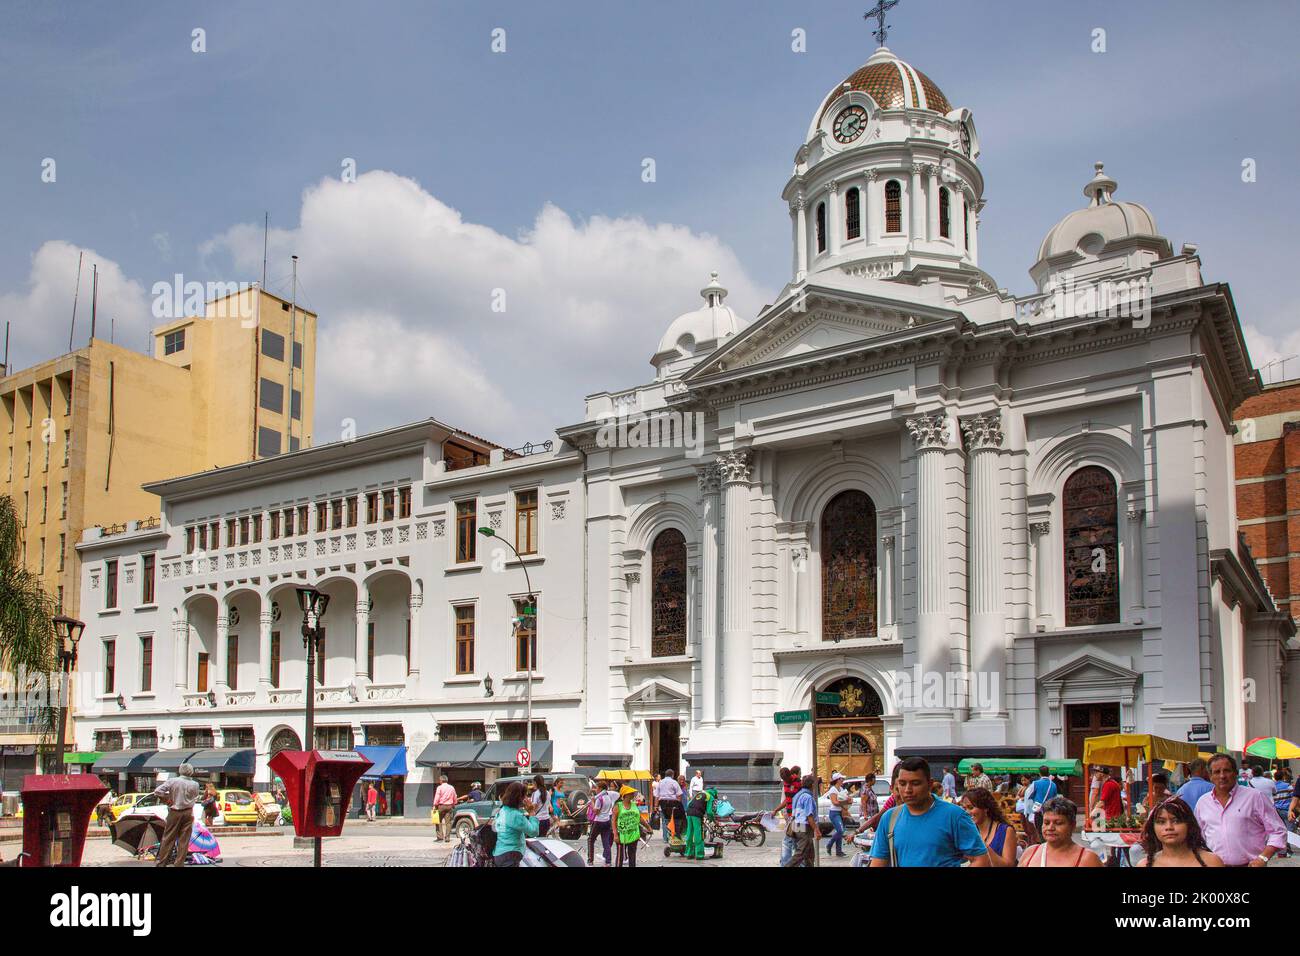 Colombia, Cali,Catedral Metropolitana de Cali is the focal point of the Plaza de Caicedo Stock Photo